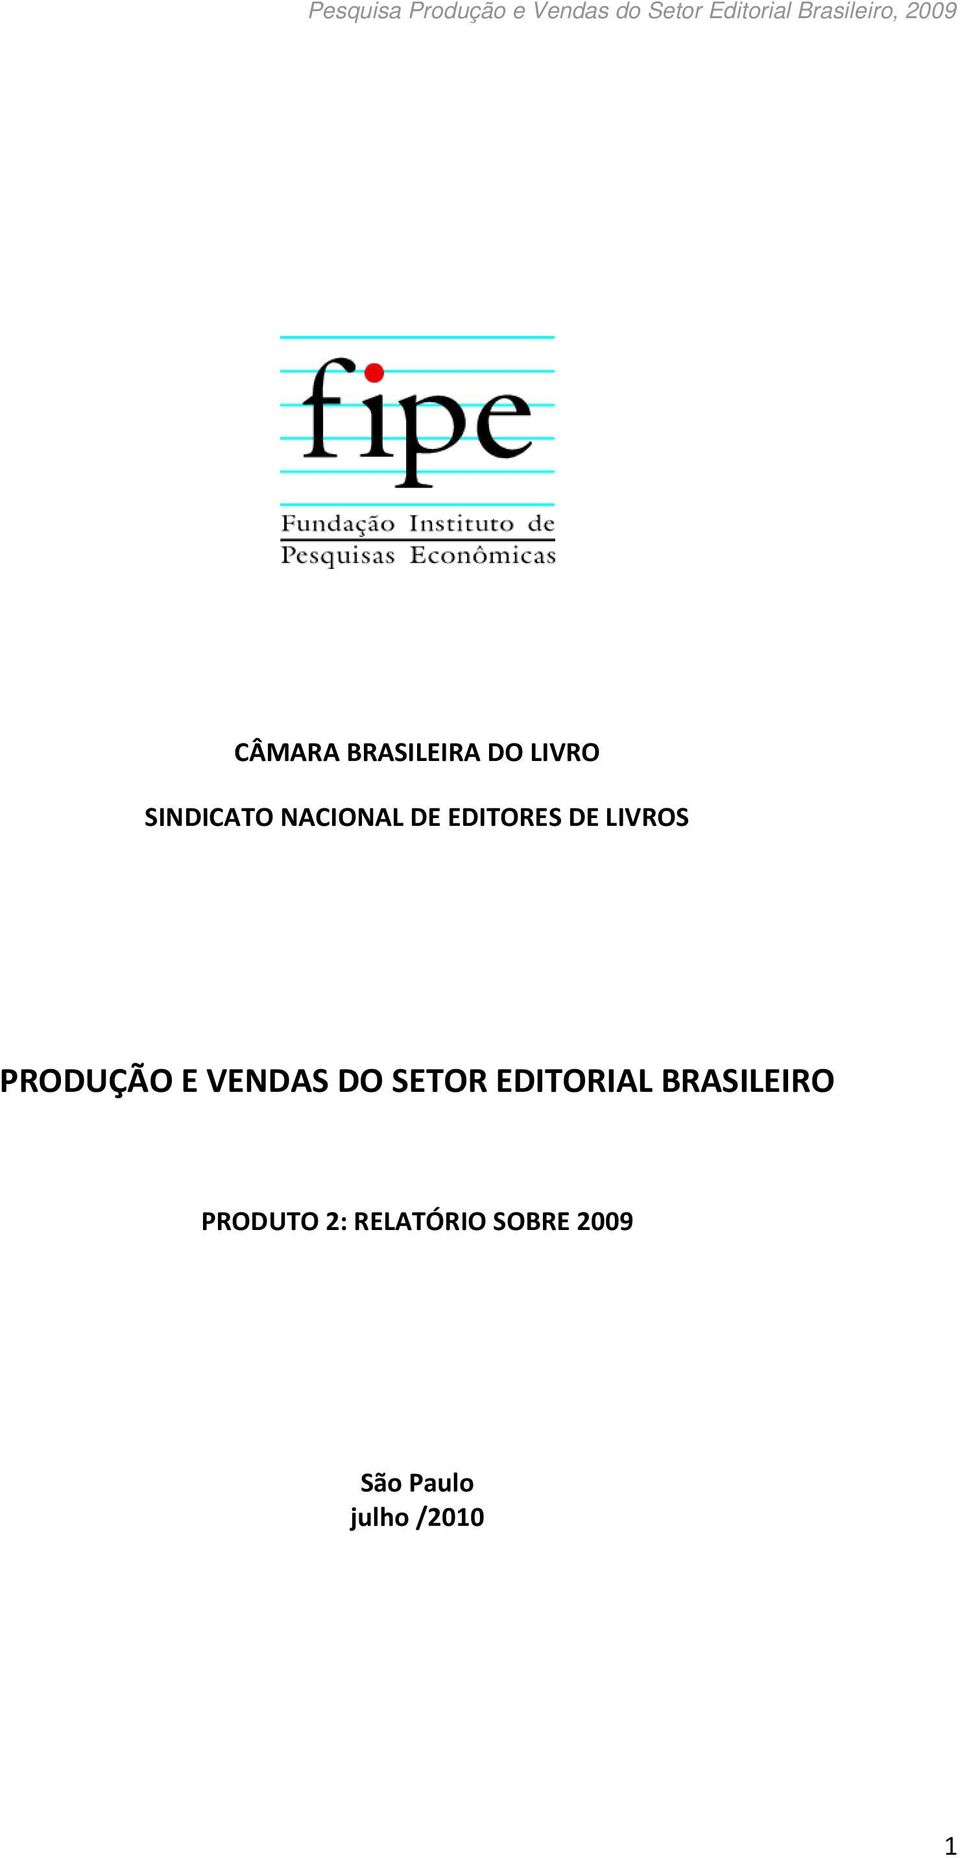 VENDAS DO SETOR EDITORIAL BRASILEIRO